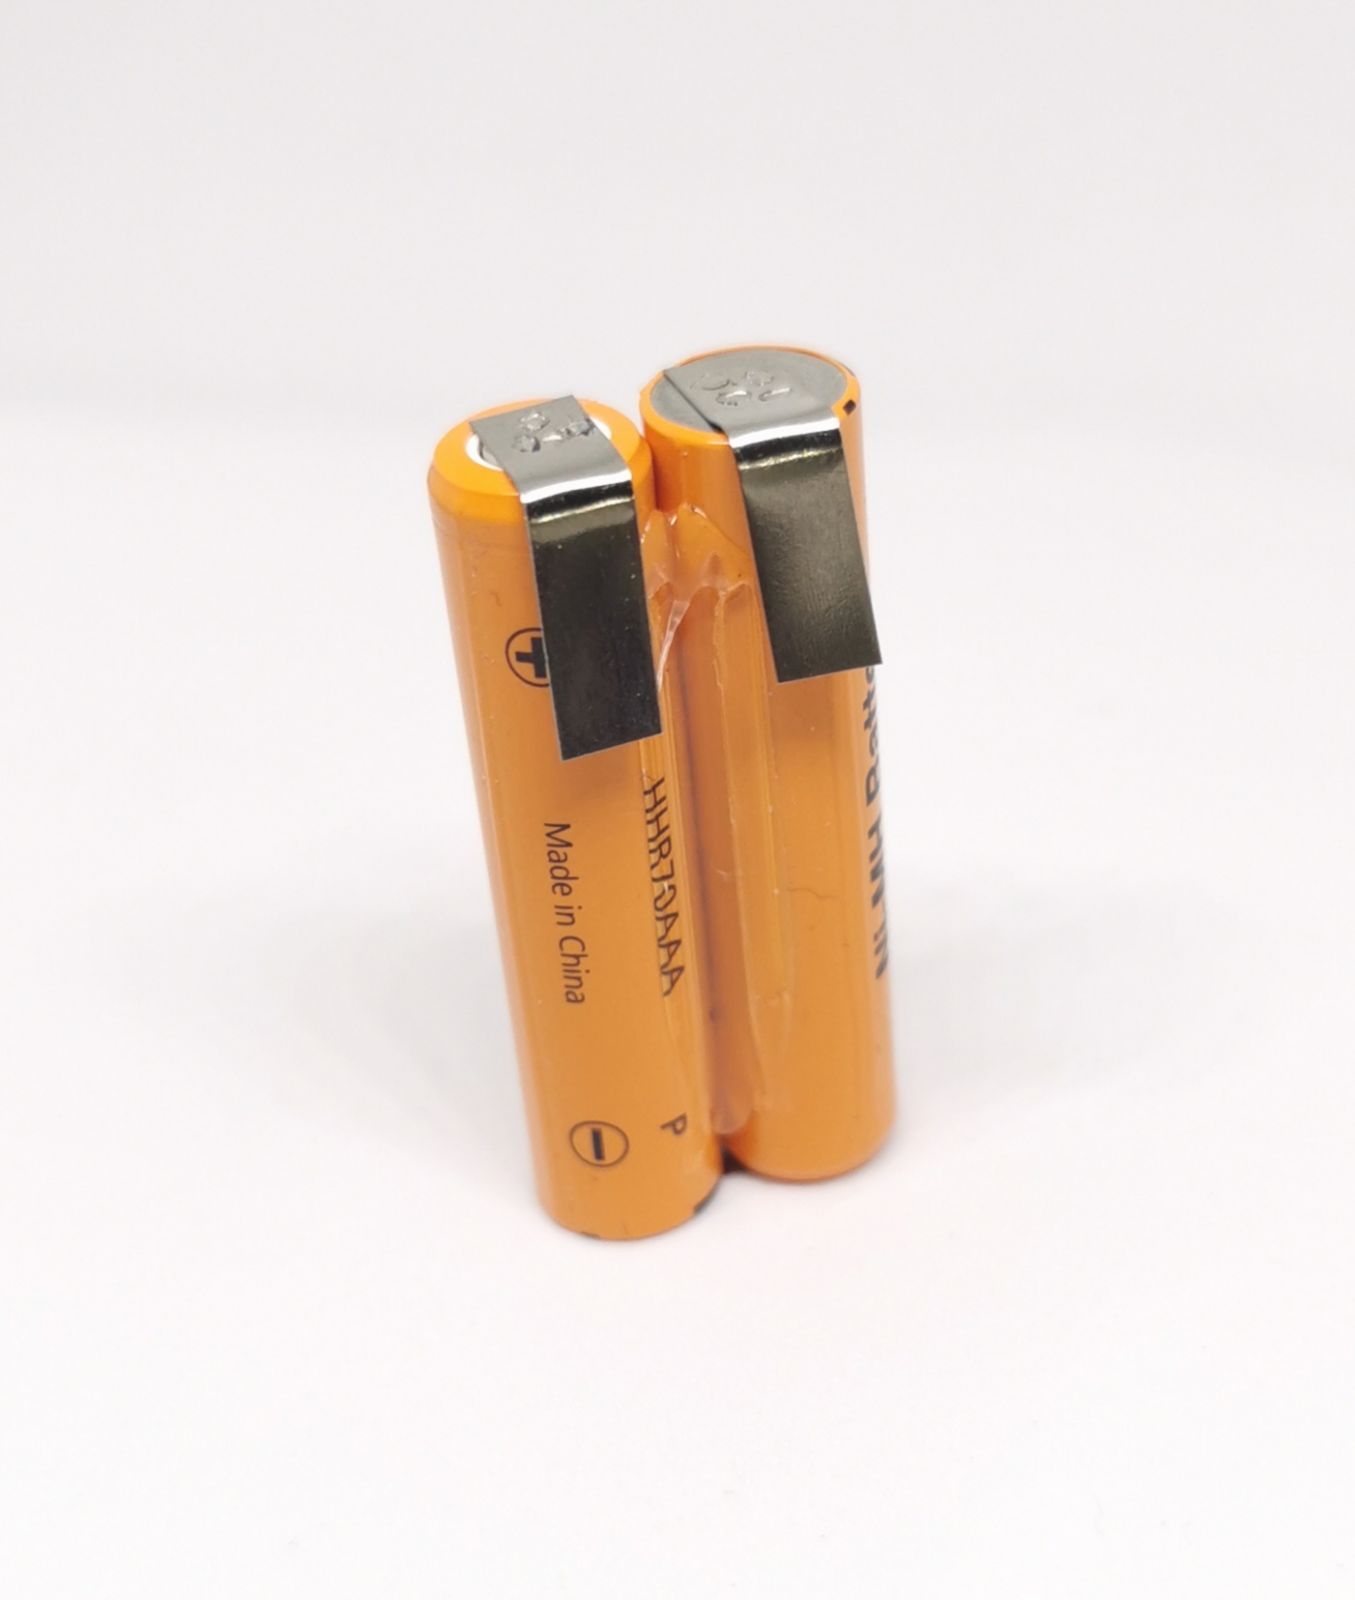 Baterie pro holící strojek Philips, Braun, Grundig, ETA atd. 800mAh AAA, 2,4V AEB